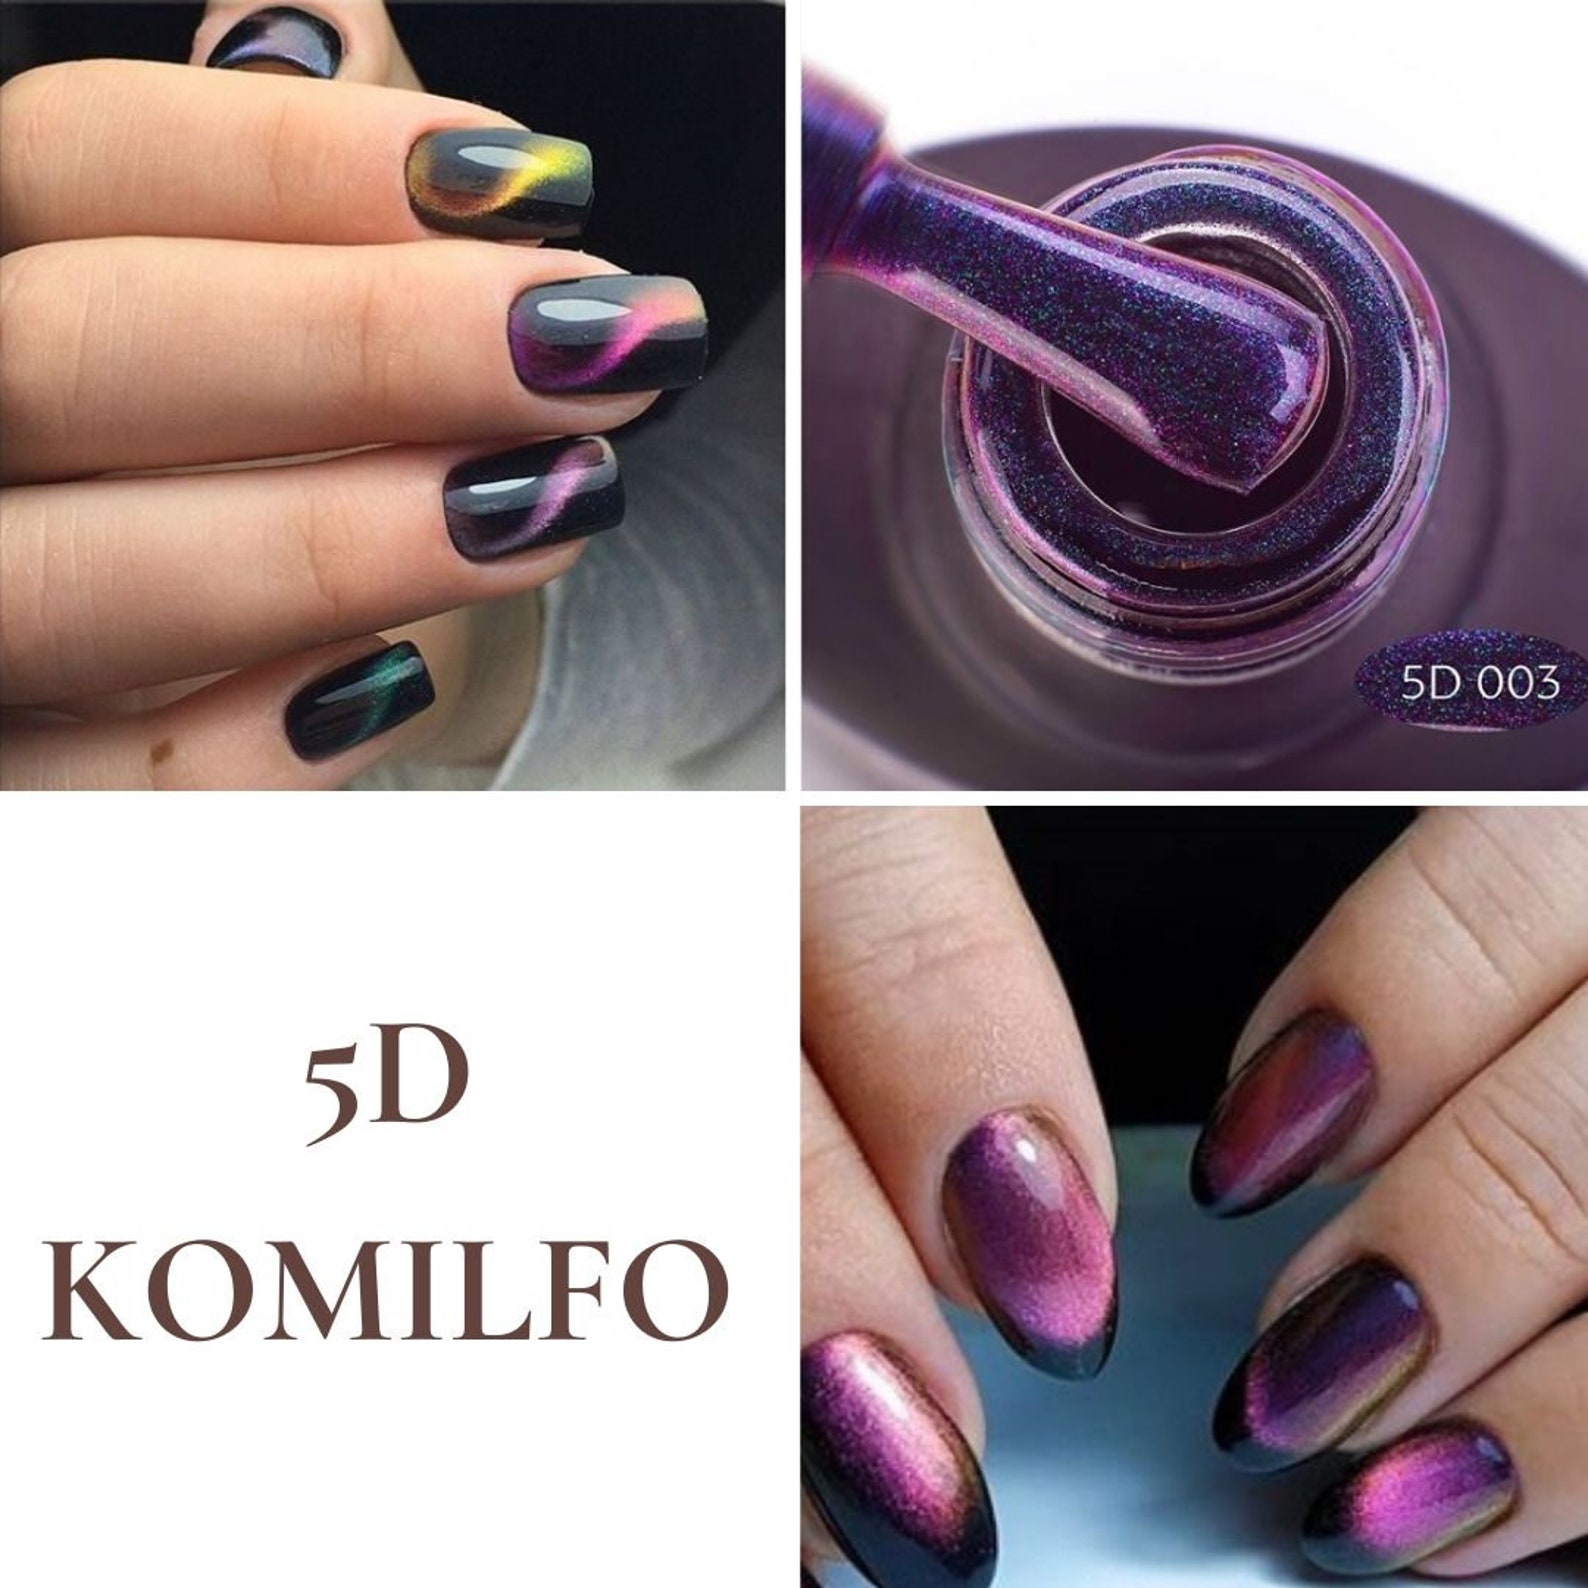 5D Cat Eye Gel Polish Komilfo Magnetic Nail Poish Galaxy | Etsy